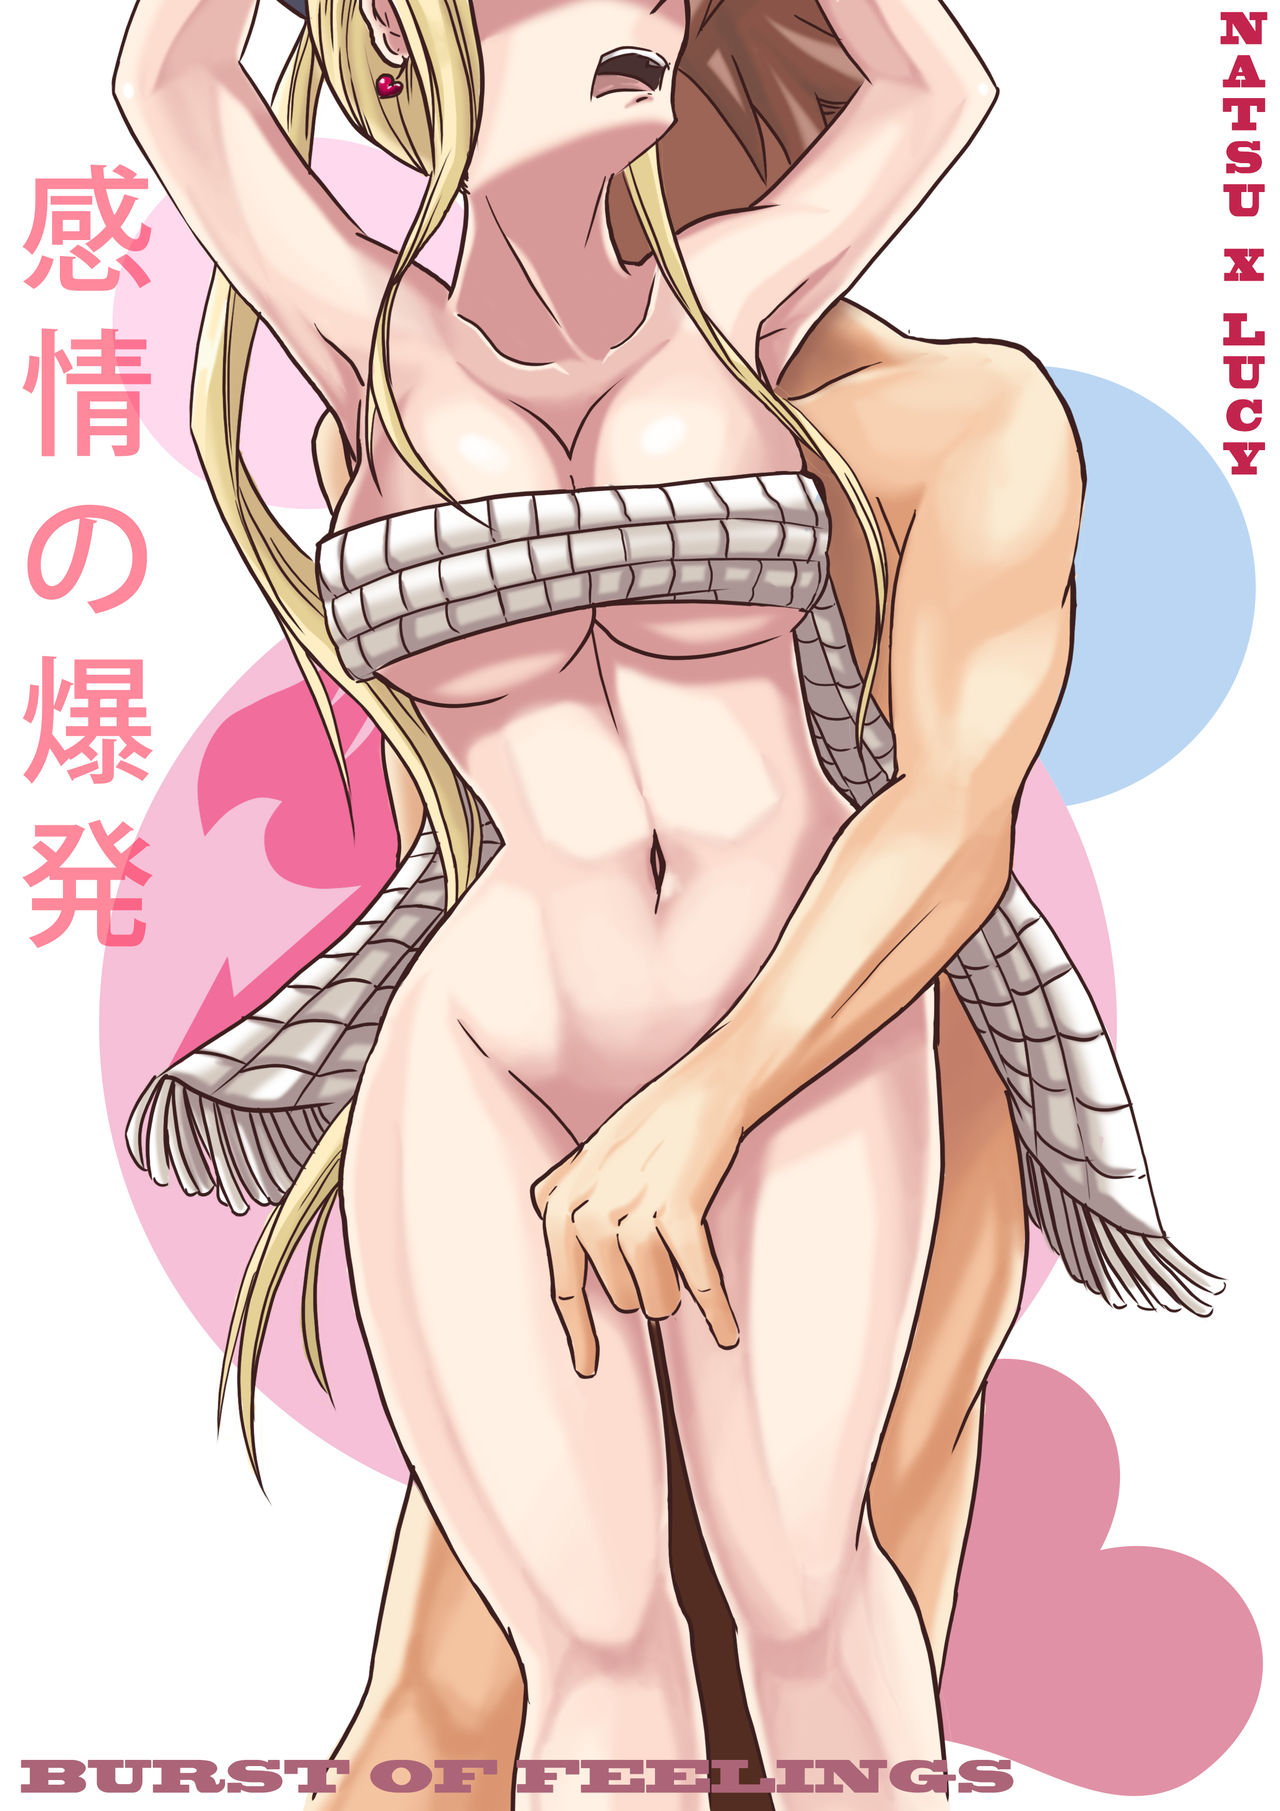 best of Tail porn manga fairy